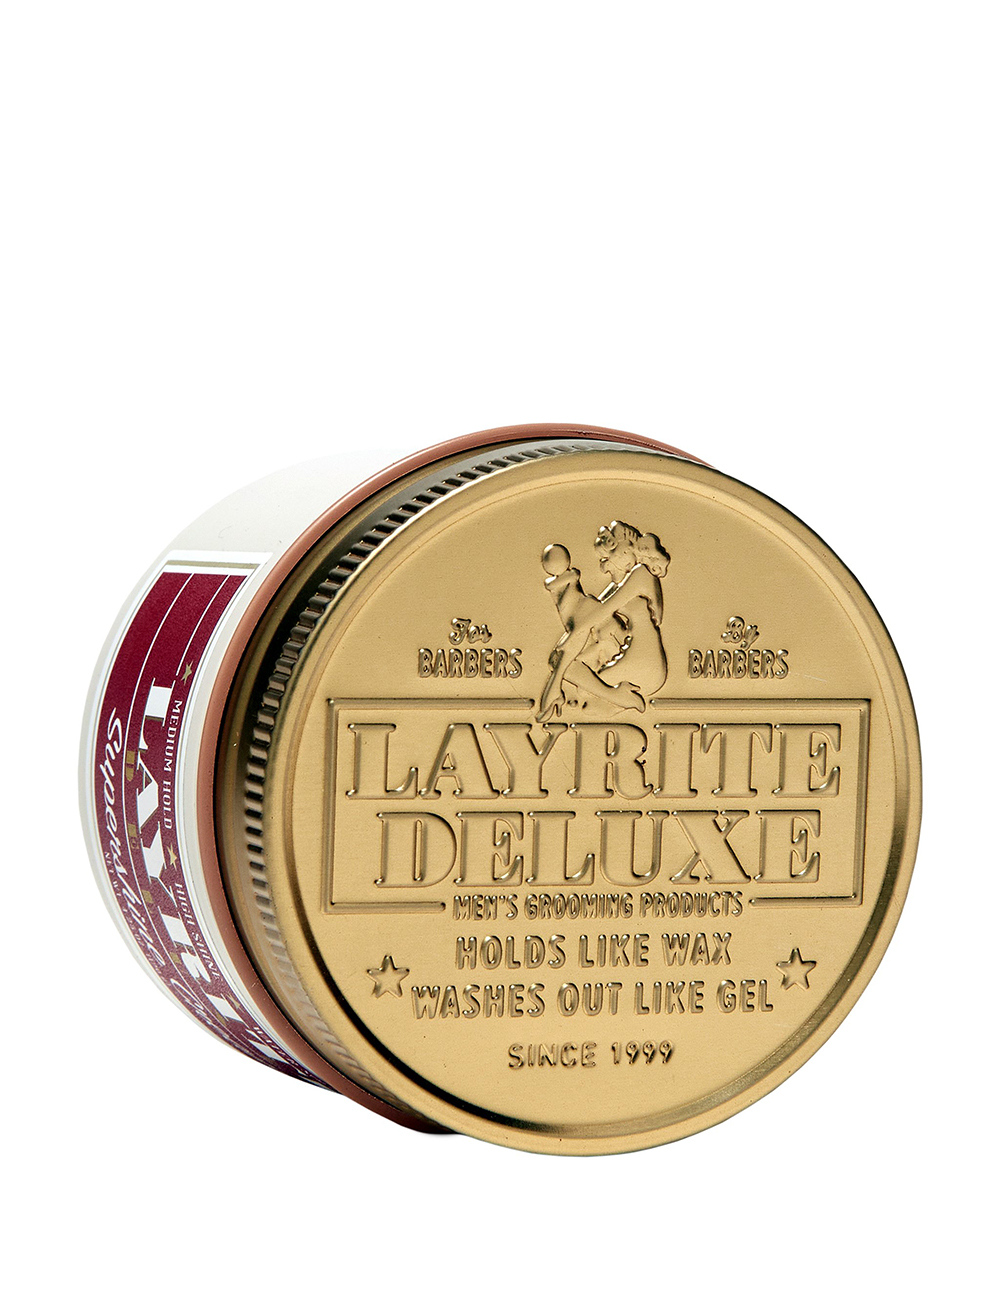 Layrite Supershine Cream 4.25oz - Hair Styling Product - Slick Styles